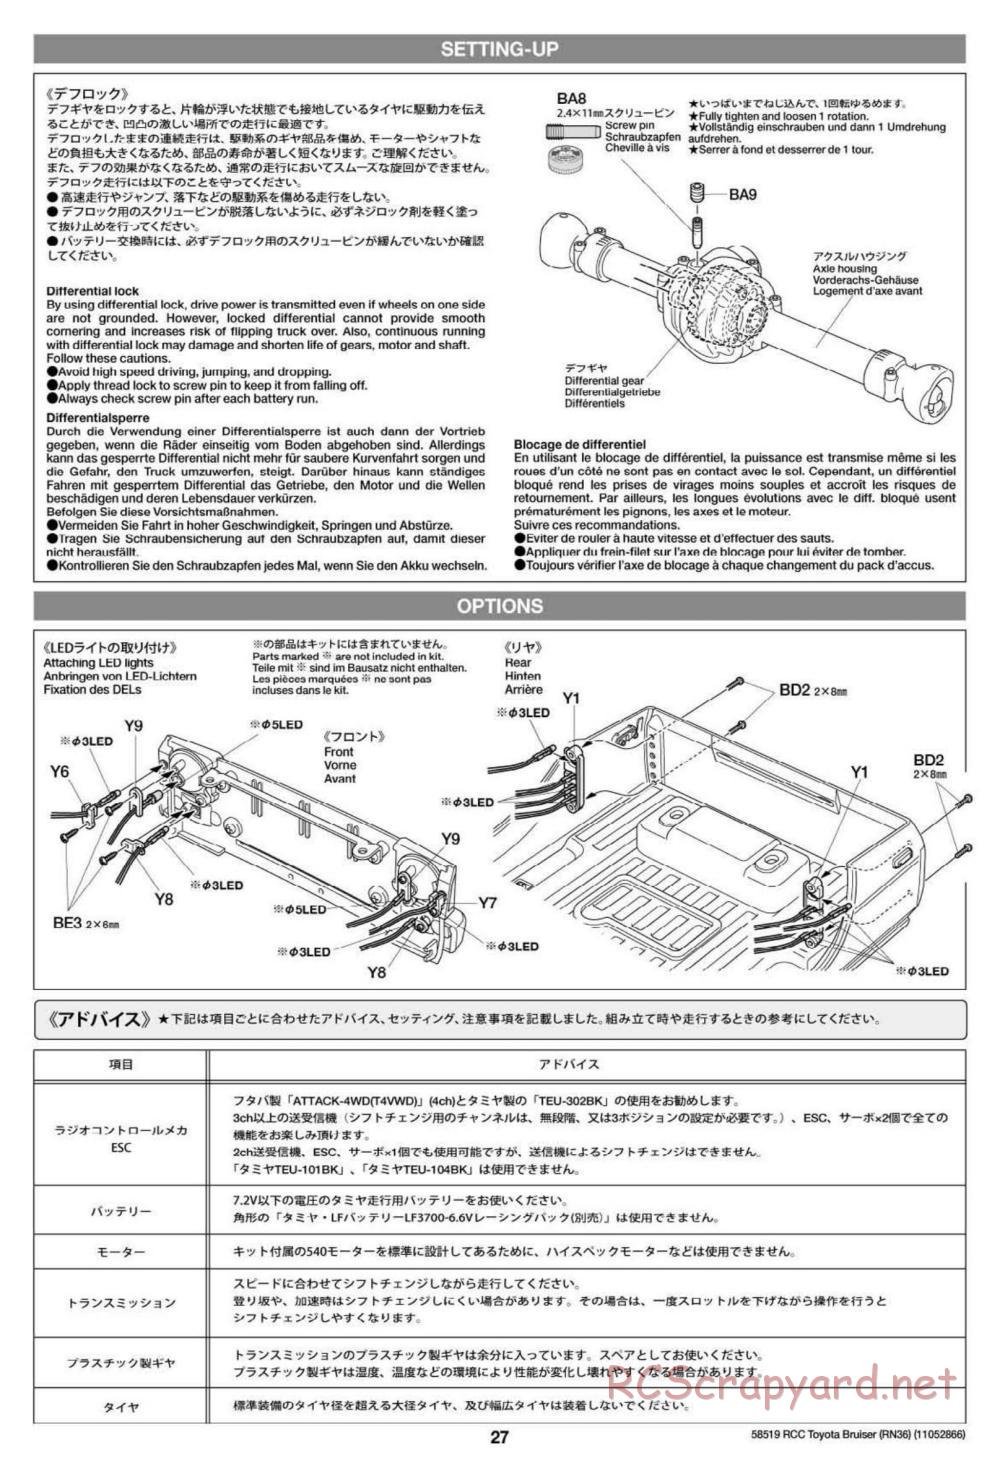 Tamiya - Toyota 4x4 Pick Up Bruiser Chassis - Manual - Page 27